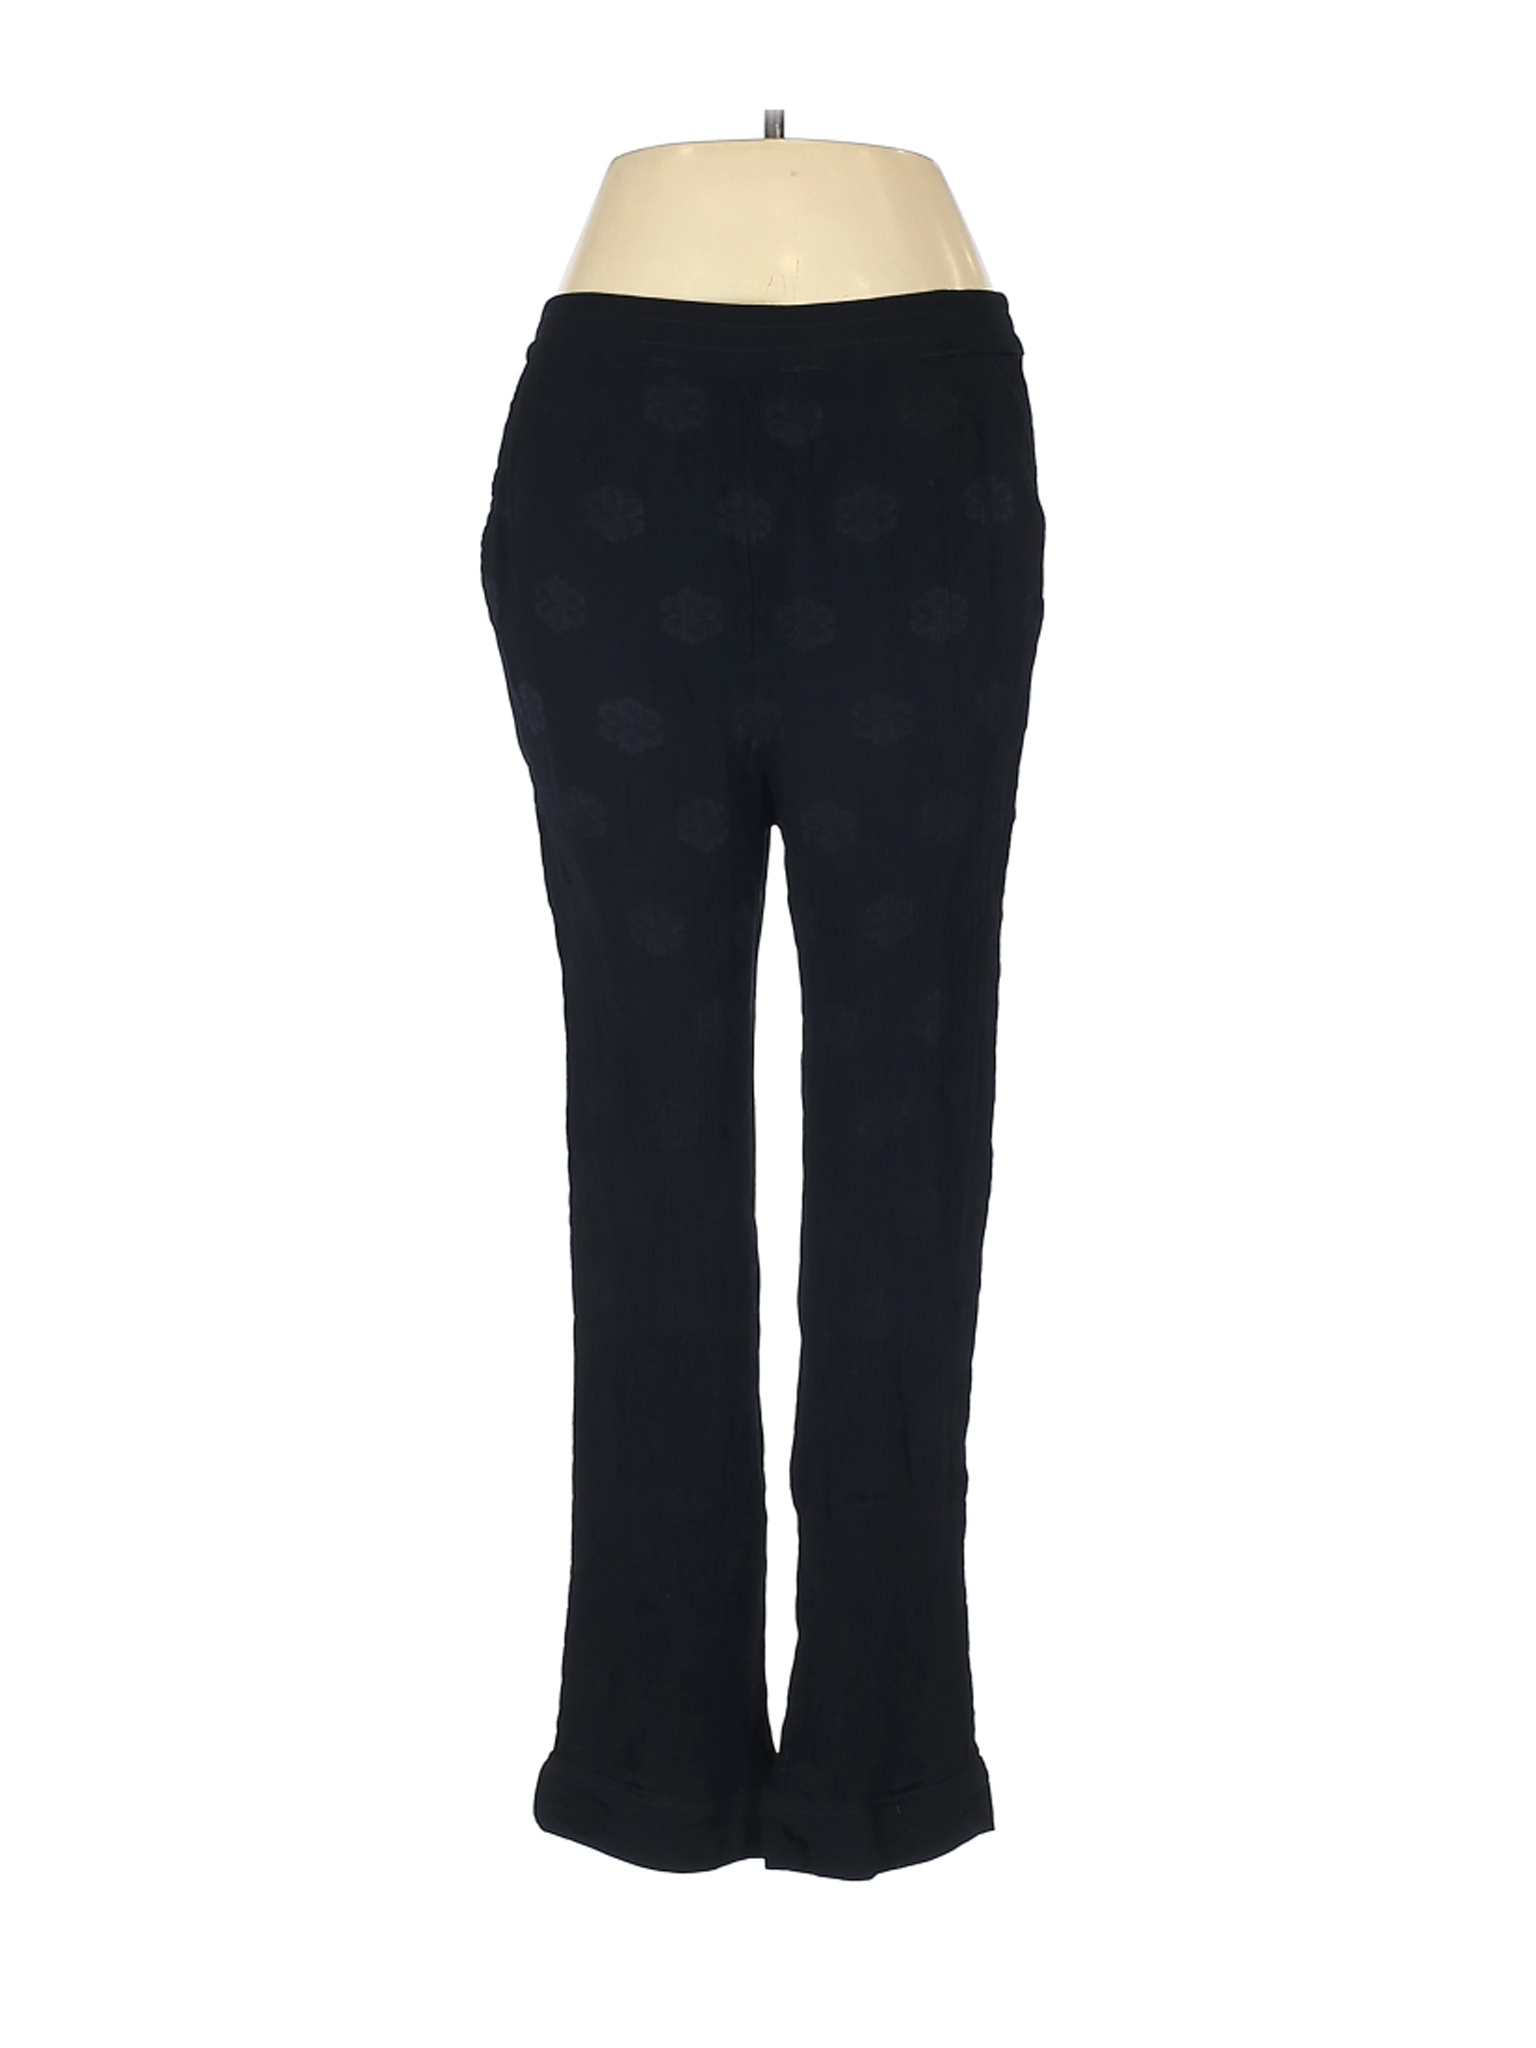 Madewell Women Black Casual Pants M | eBay